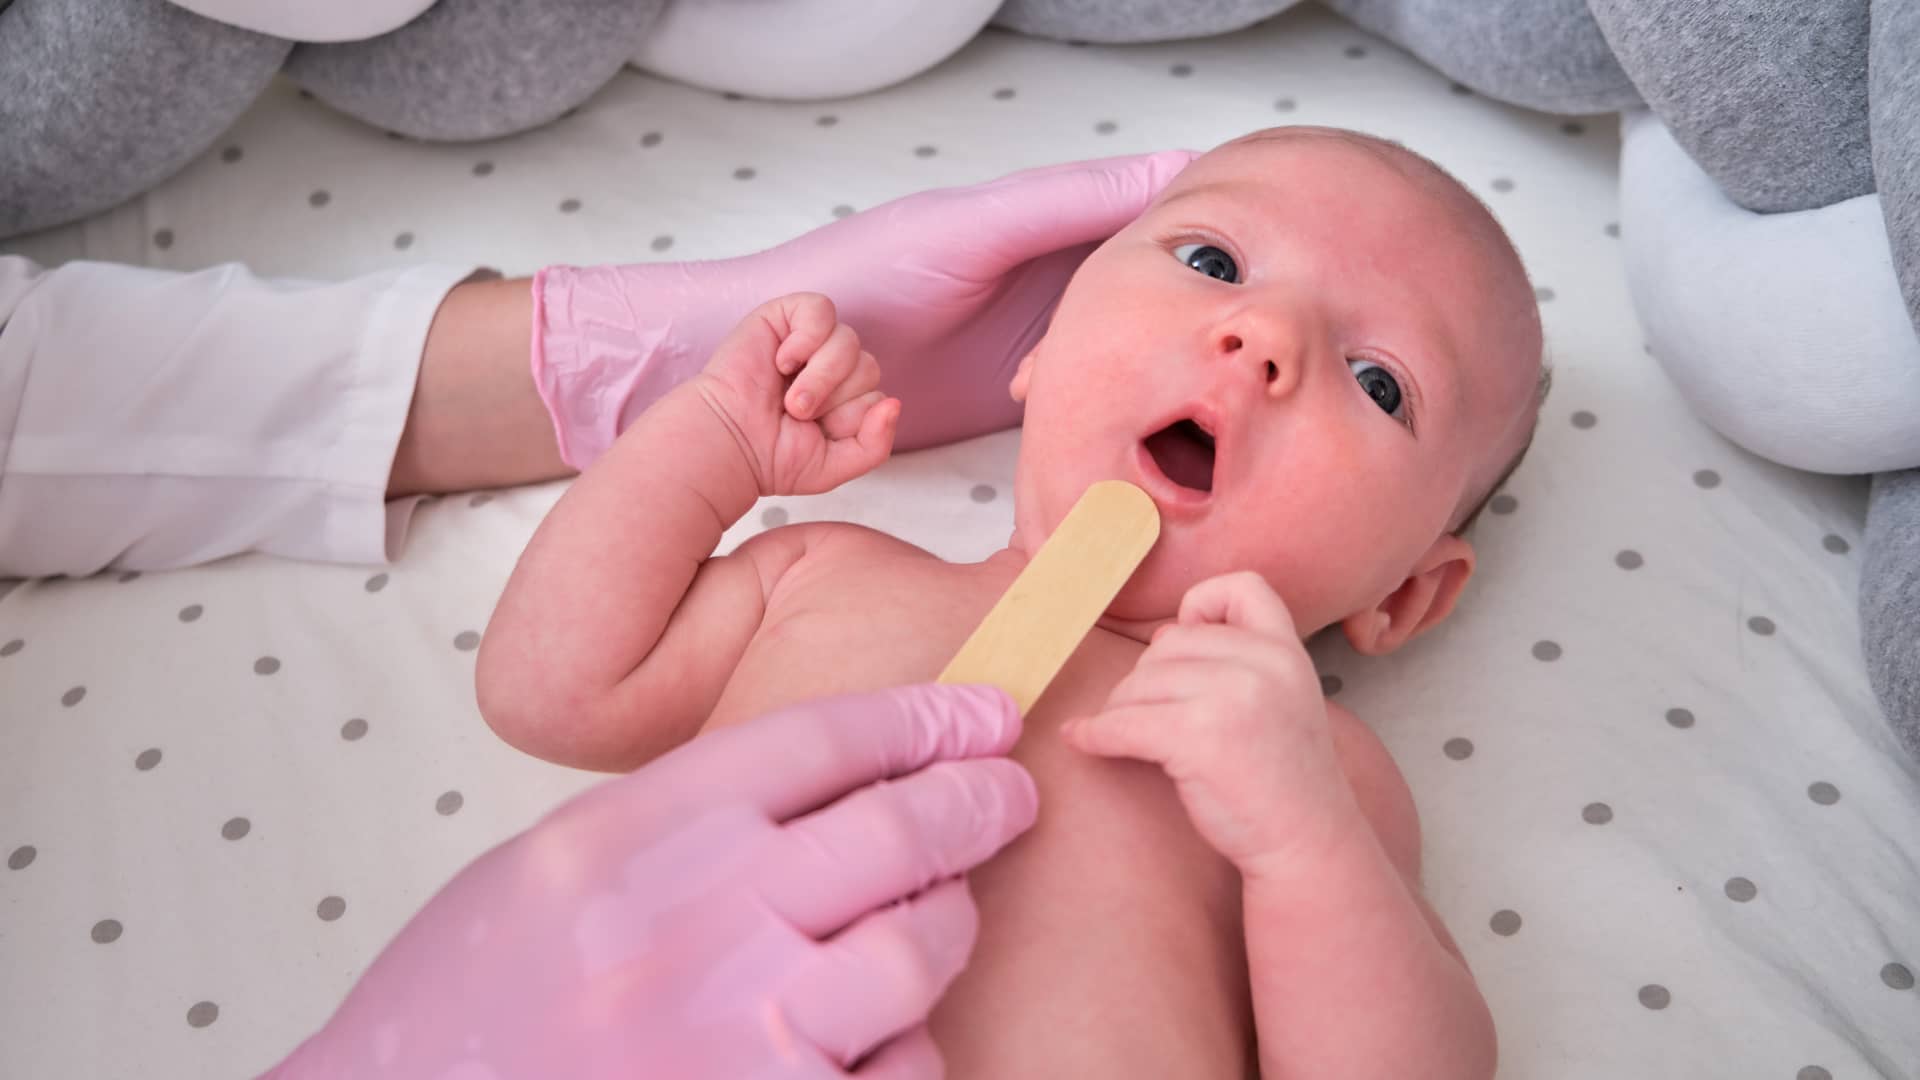 Retrognatia en bebés: ¿cómo se corrige?